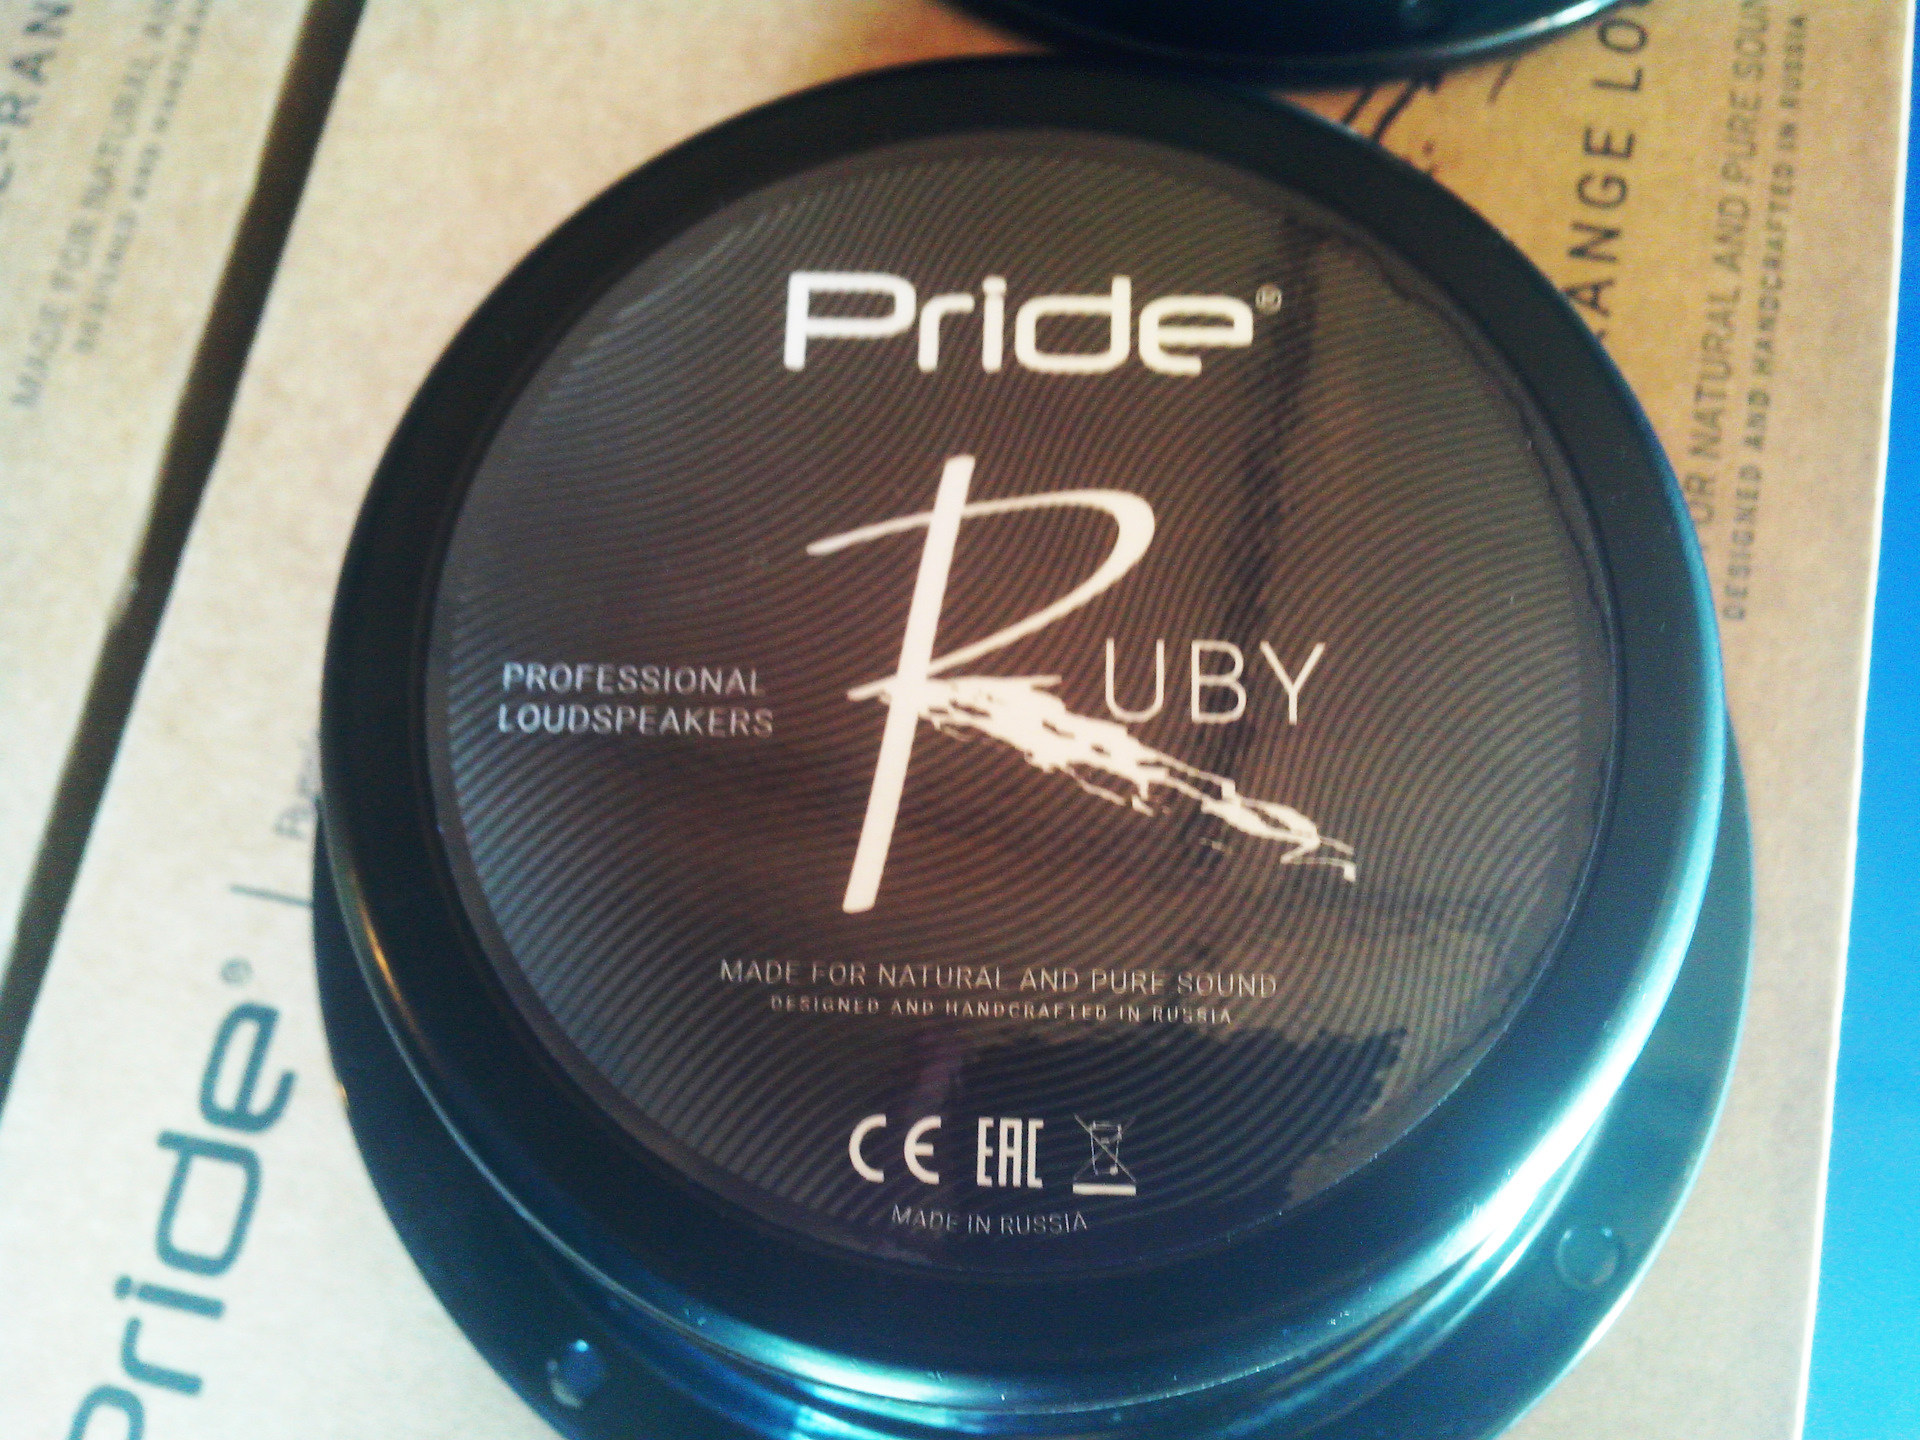 Прайд руби 6.5. Pride Ruby Performance грили. 3 Pride Ruby Киа Рио 3. Диаметр магнита Прайд Руби воисе. Pride Ruby фф2 Рестайлинг.